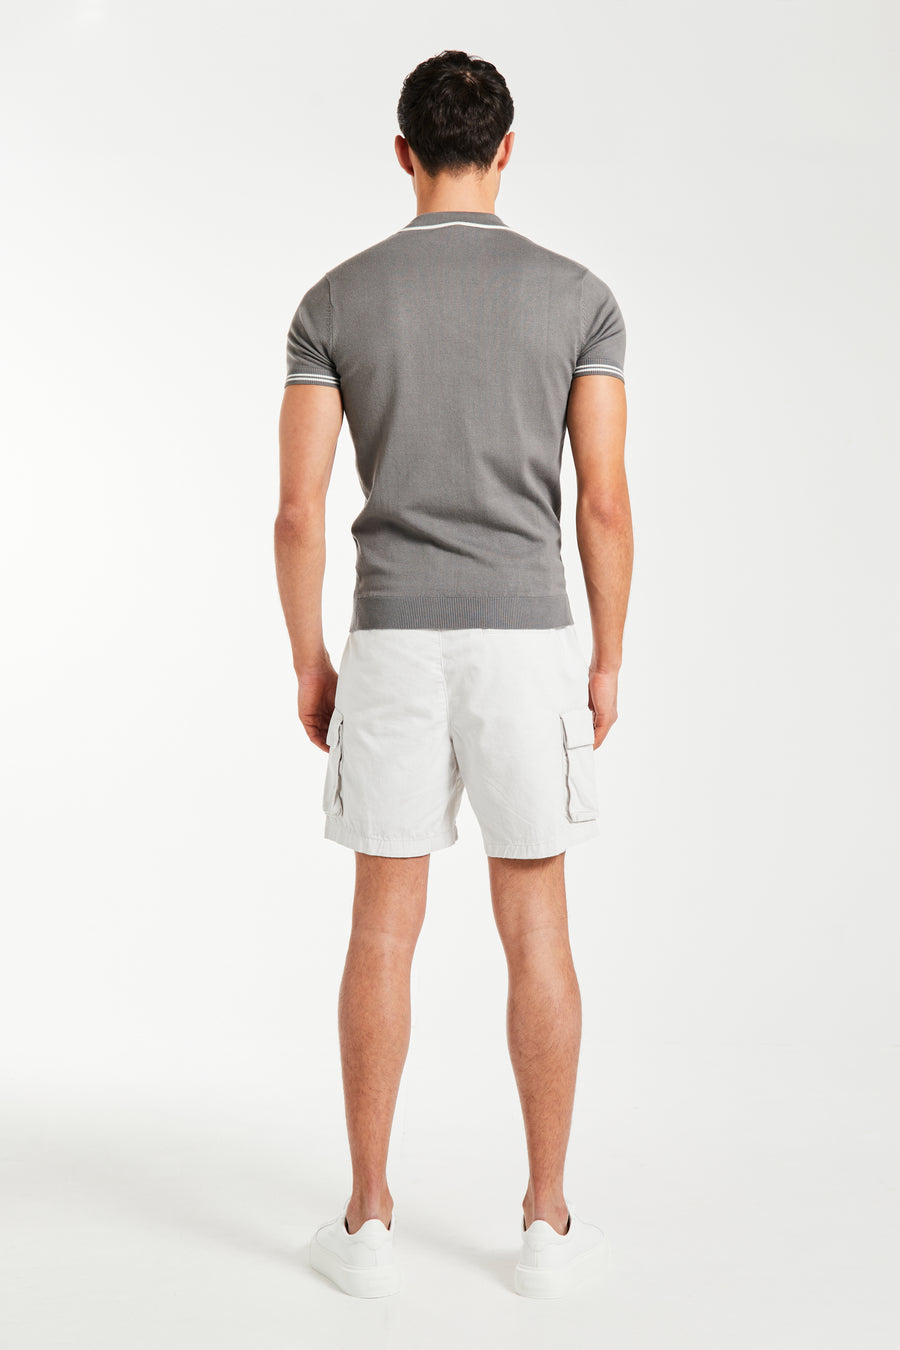 Back profile of men's "Cayton" t-shirt in grey